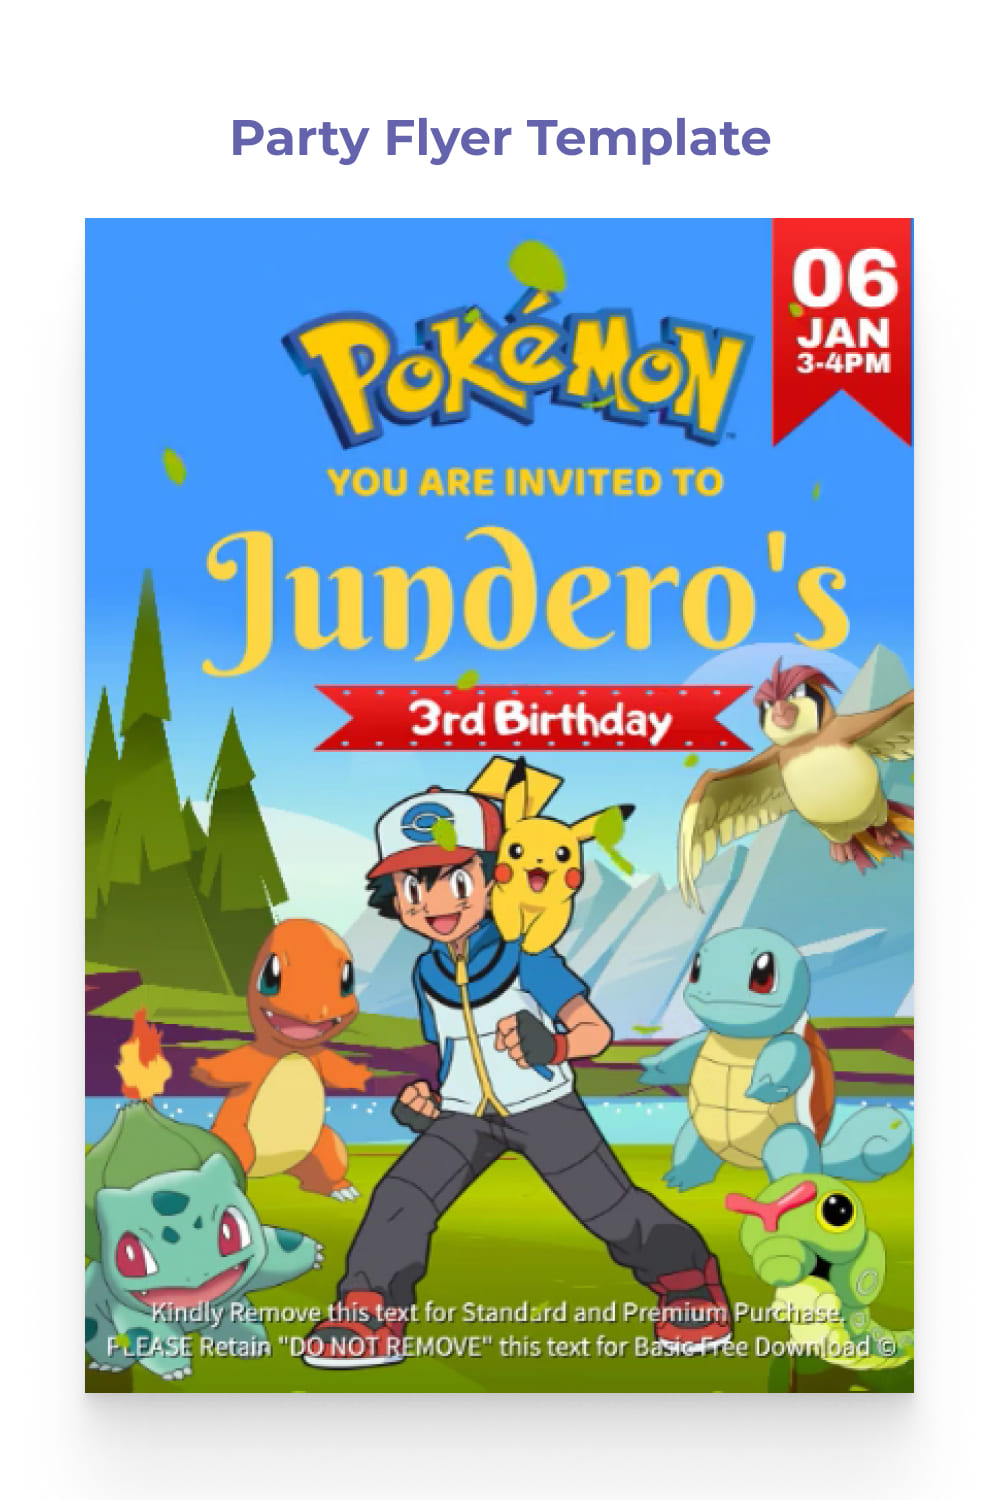 Pokemon pattern party invitation.